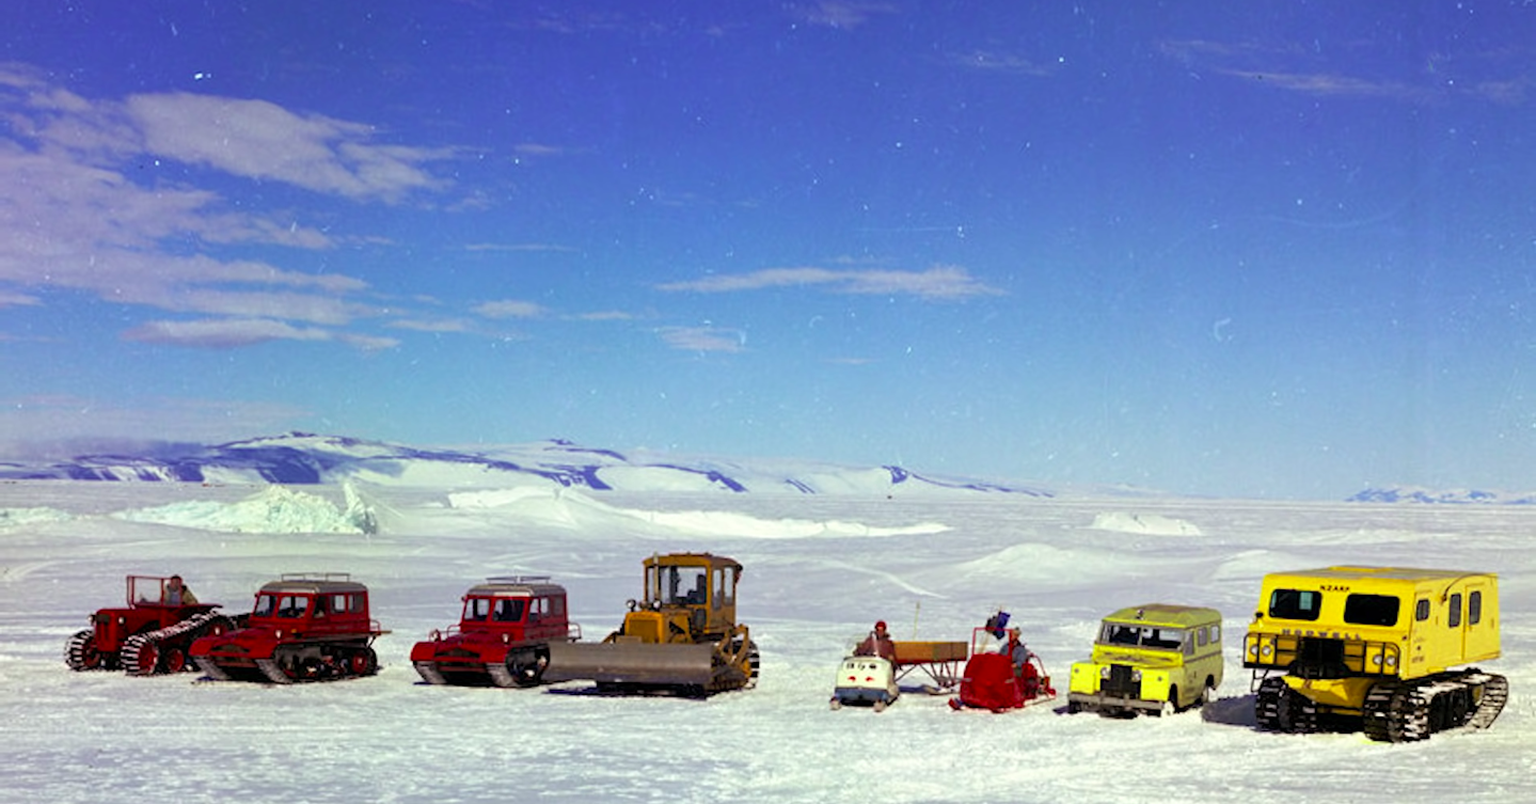 mini-trac Antarktis auto kettenfahrzeug 1965 Australien forschung retro design https://youtu.be/dWWOnRz_xtI